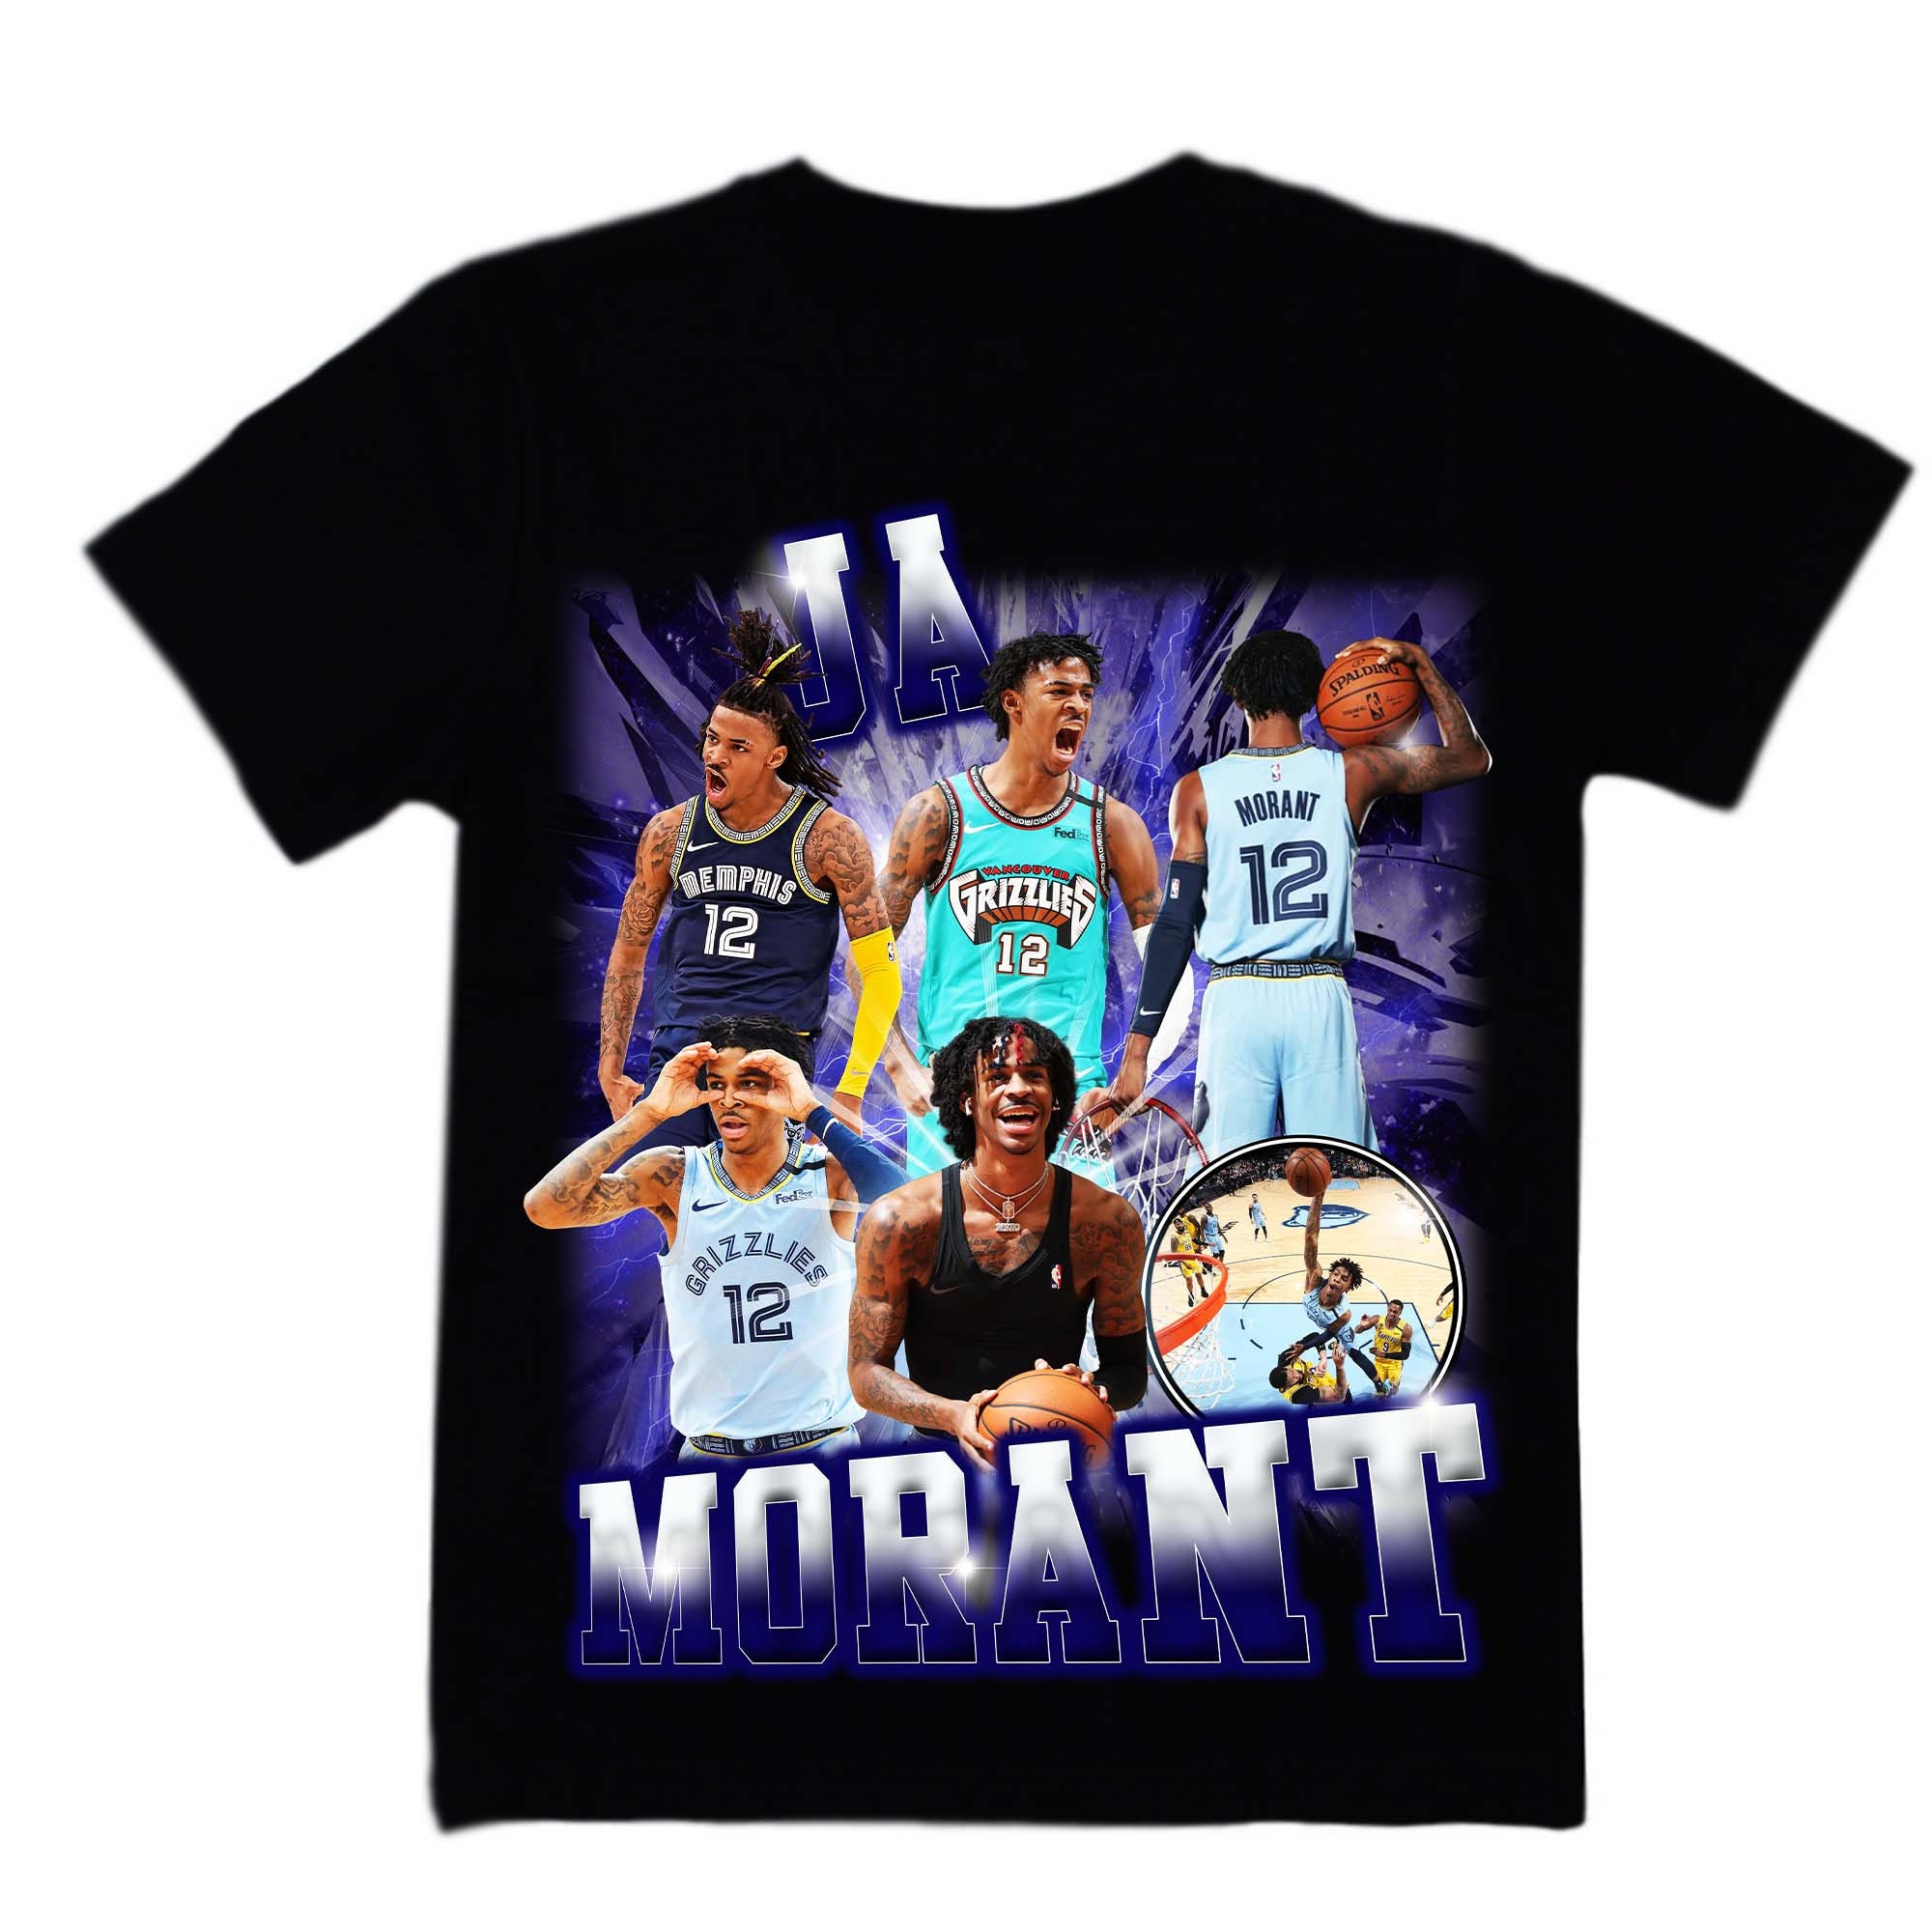 Nba Vancouver Grizzlies Ja Morant #12 Basketball Jersey,morant(adult  Clothing) 